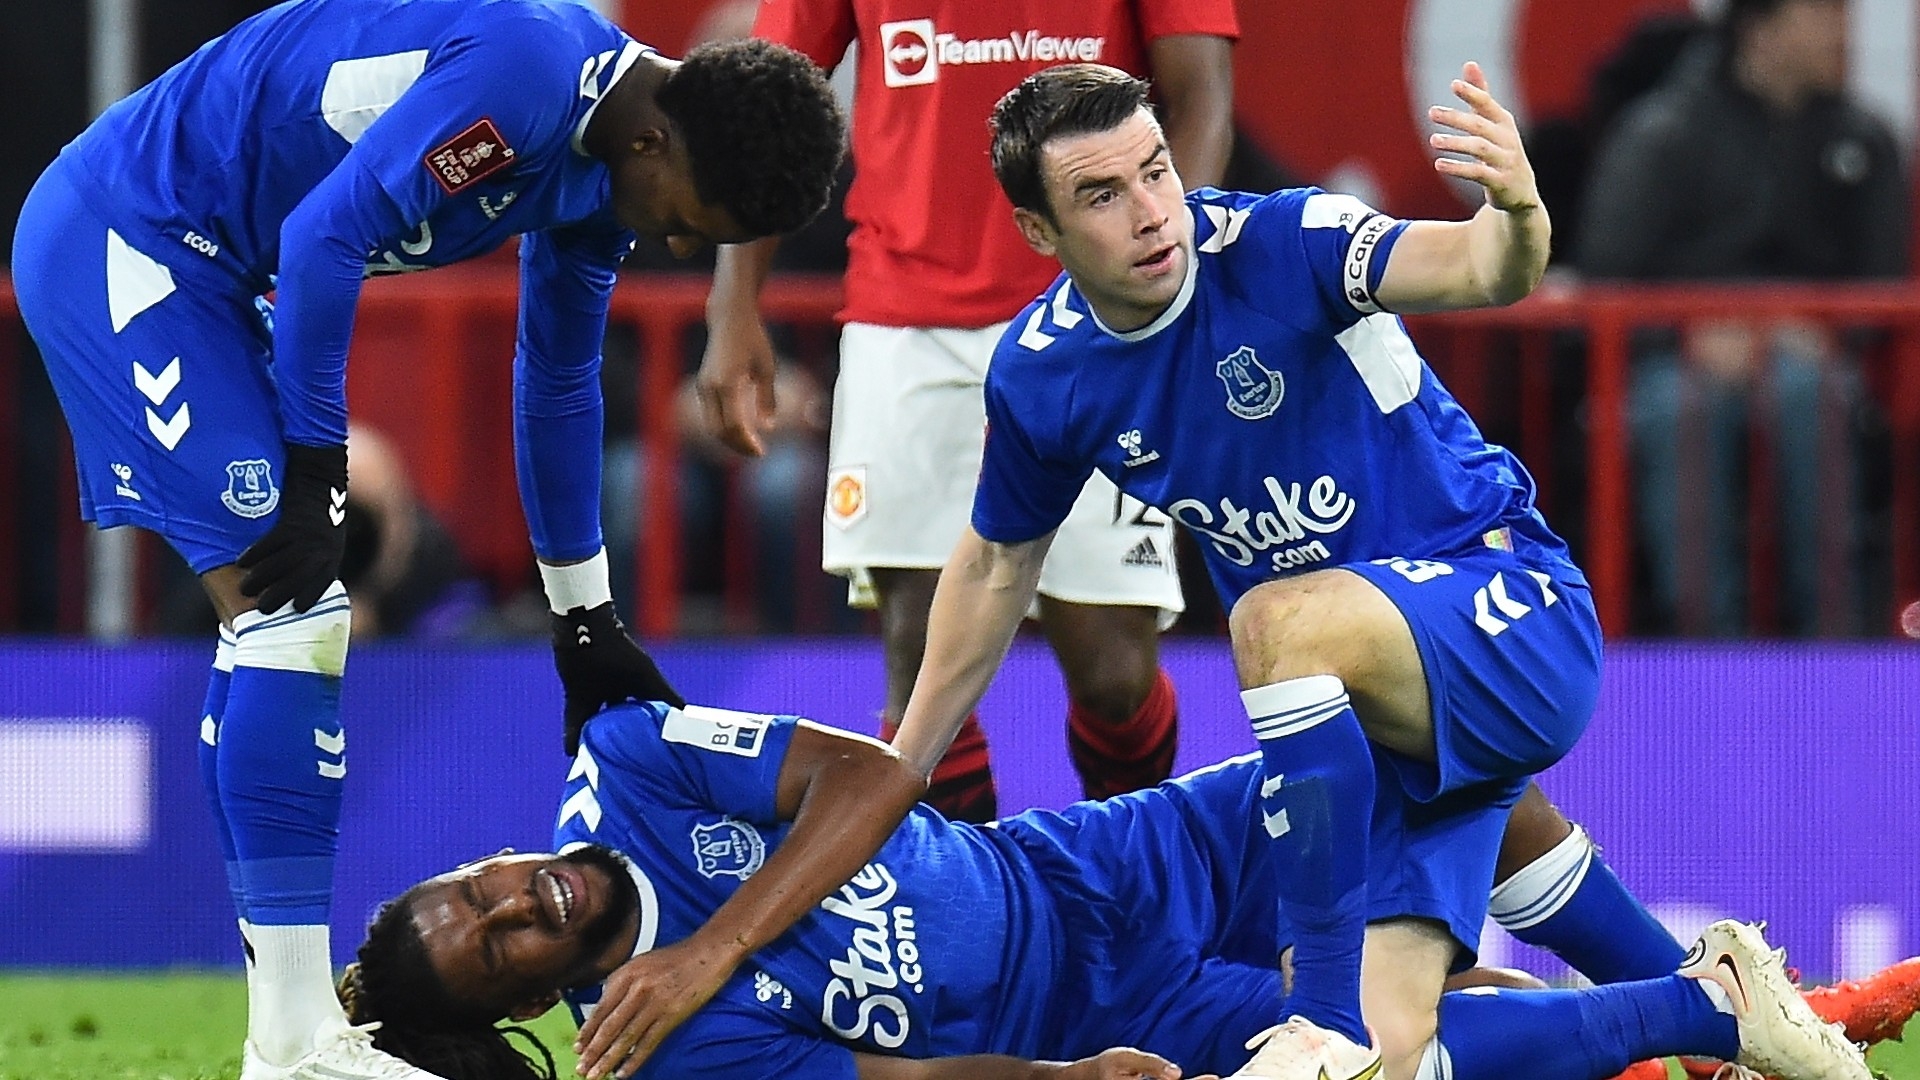 Alex Iwobi Career at Everton Under Threat following Injury